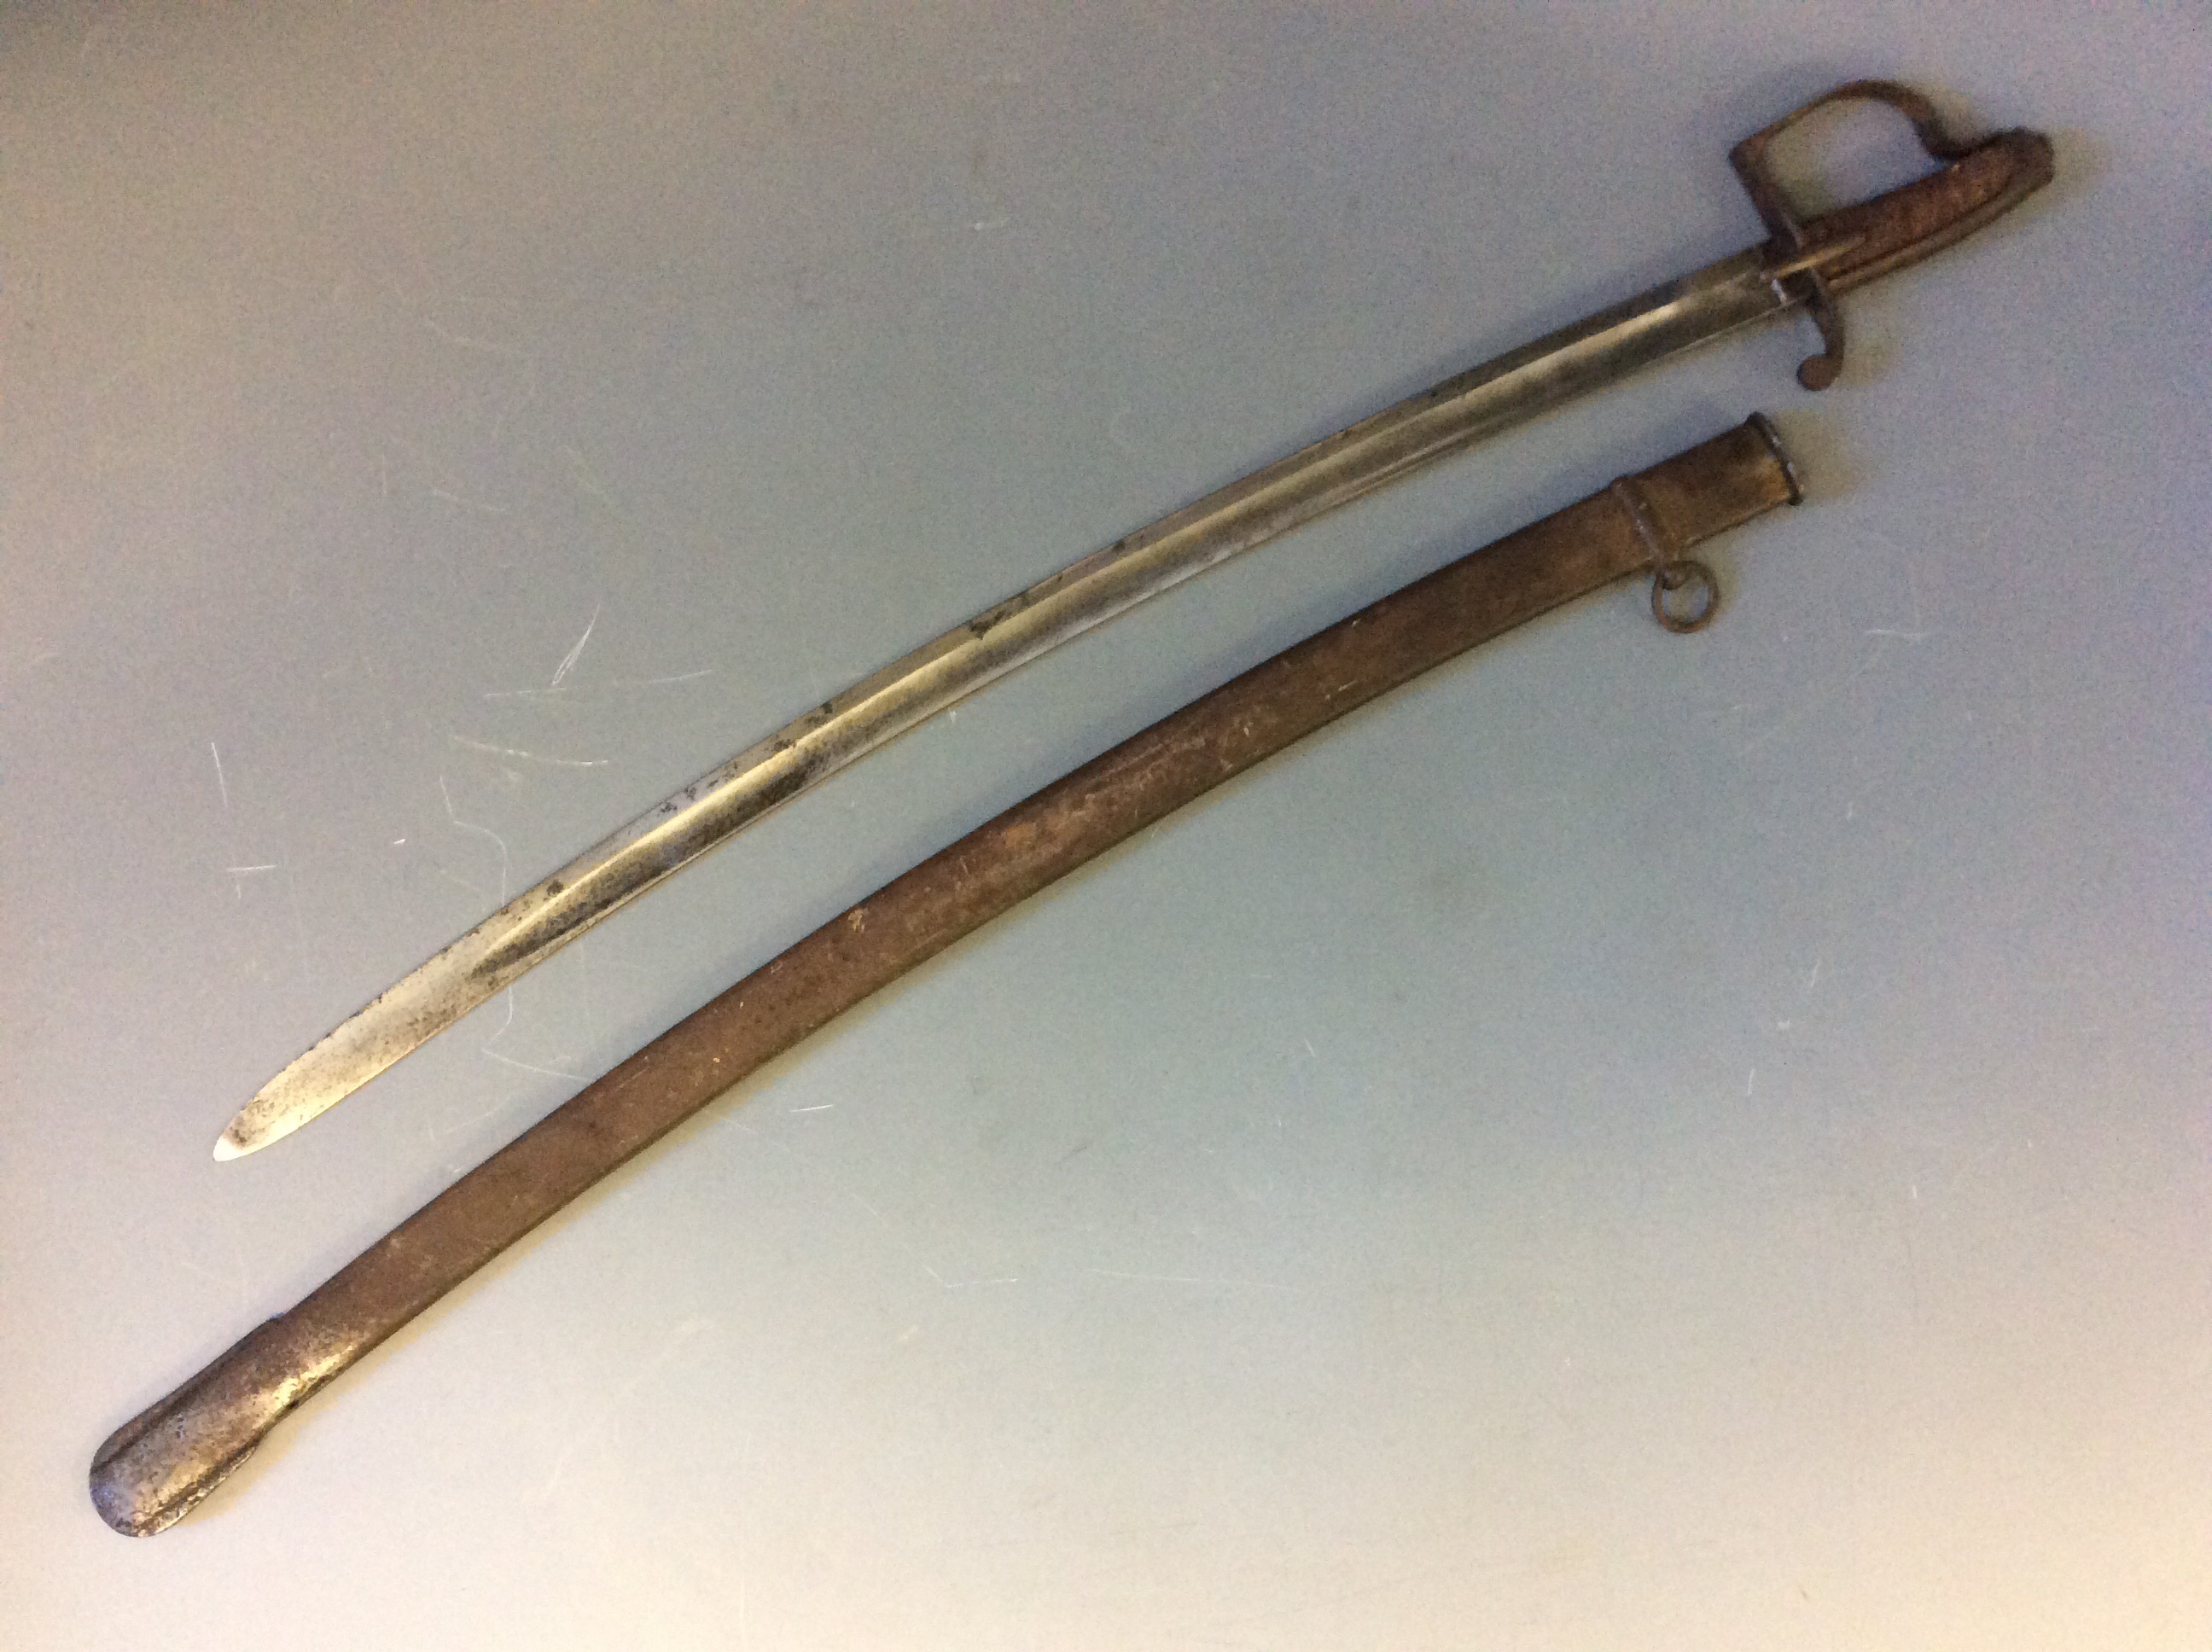 An S&K cavalry Sword.